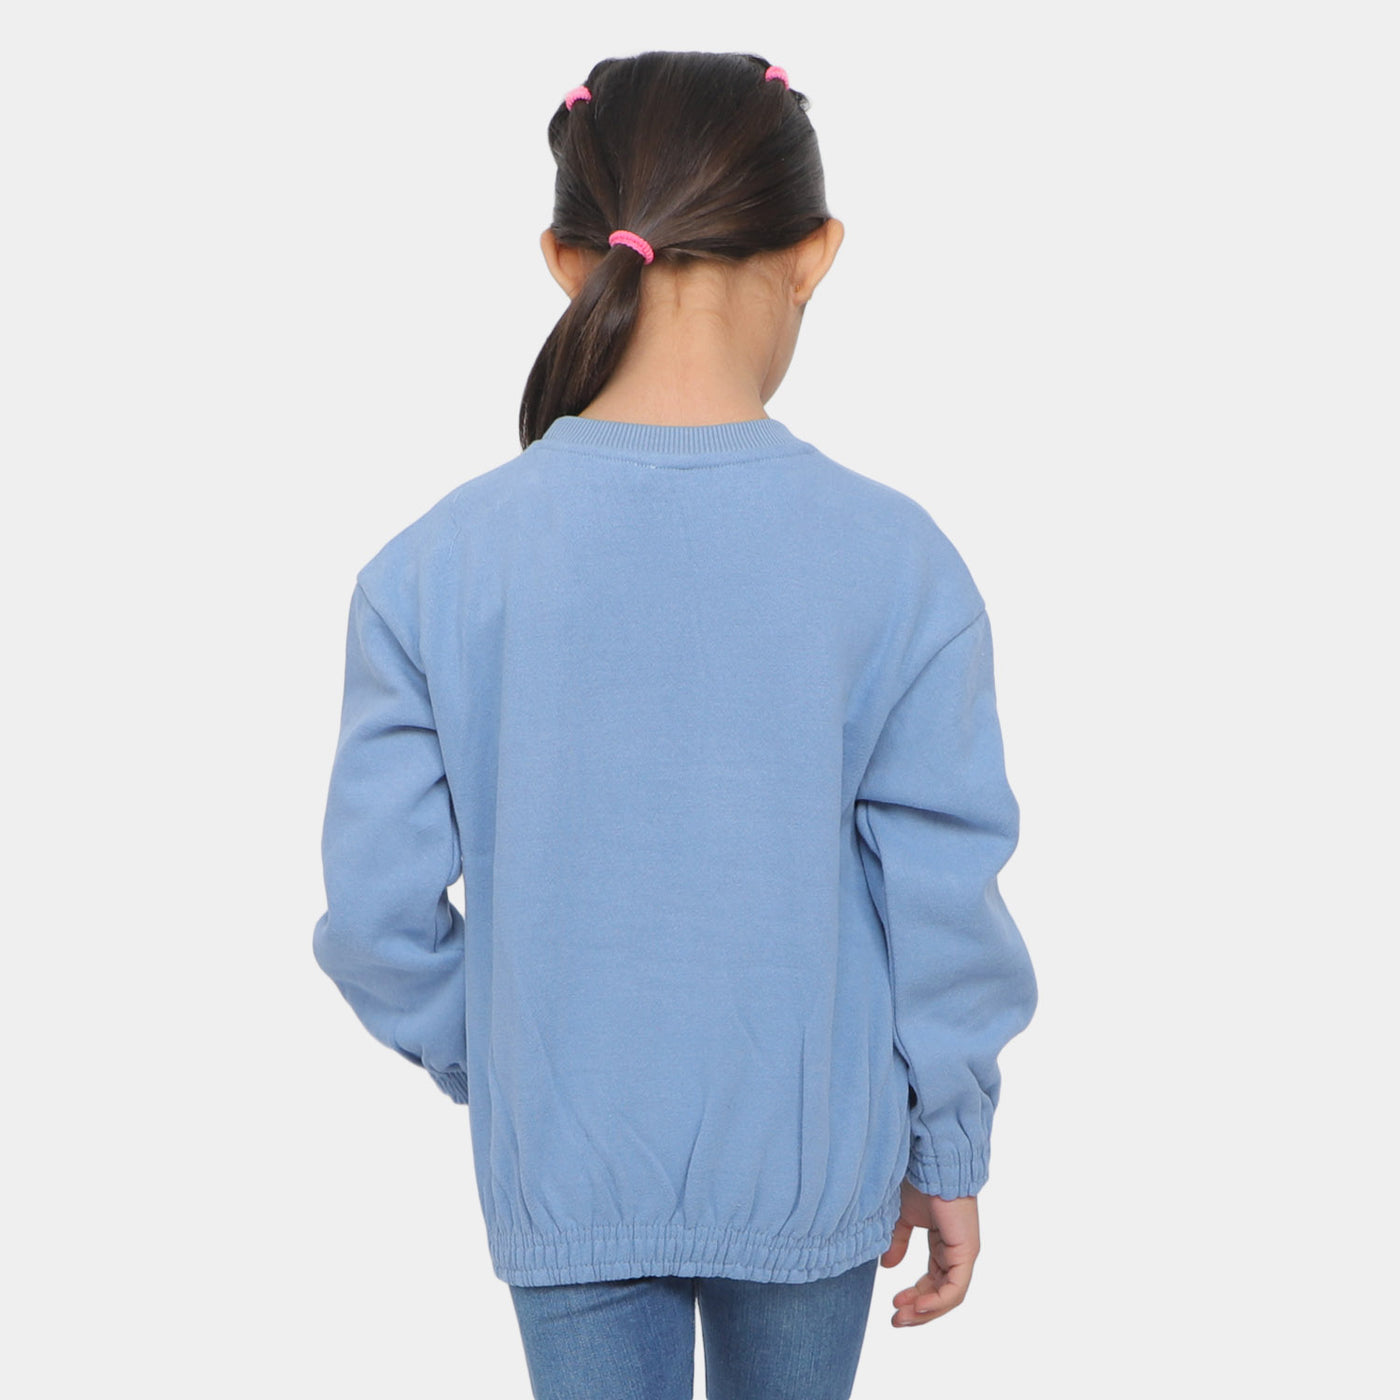 Girls Sweatshirt Dream Big - SKY BLUE